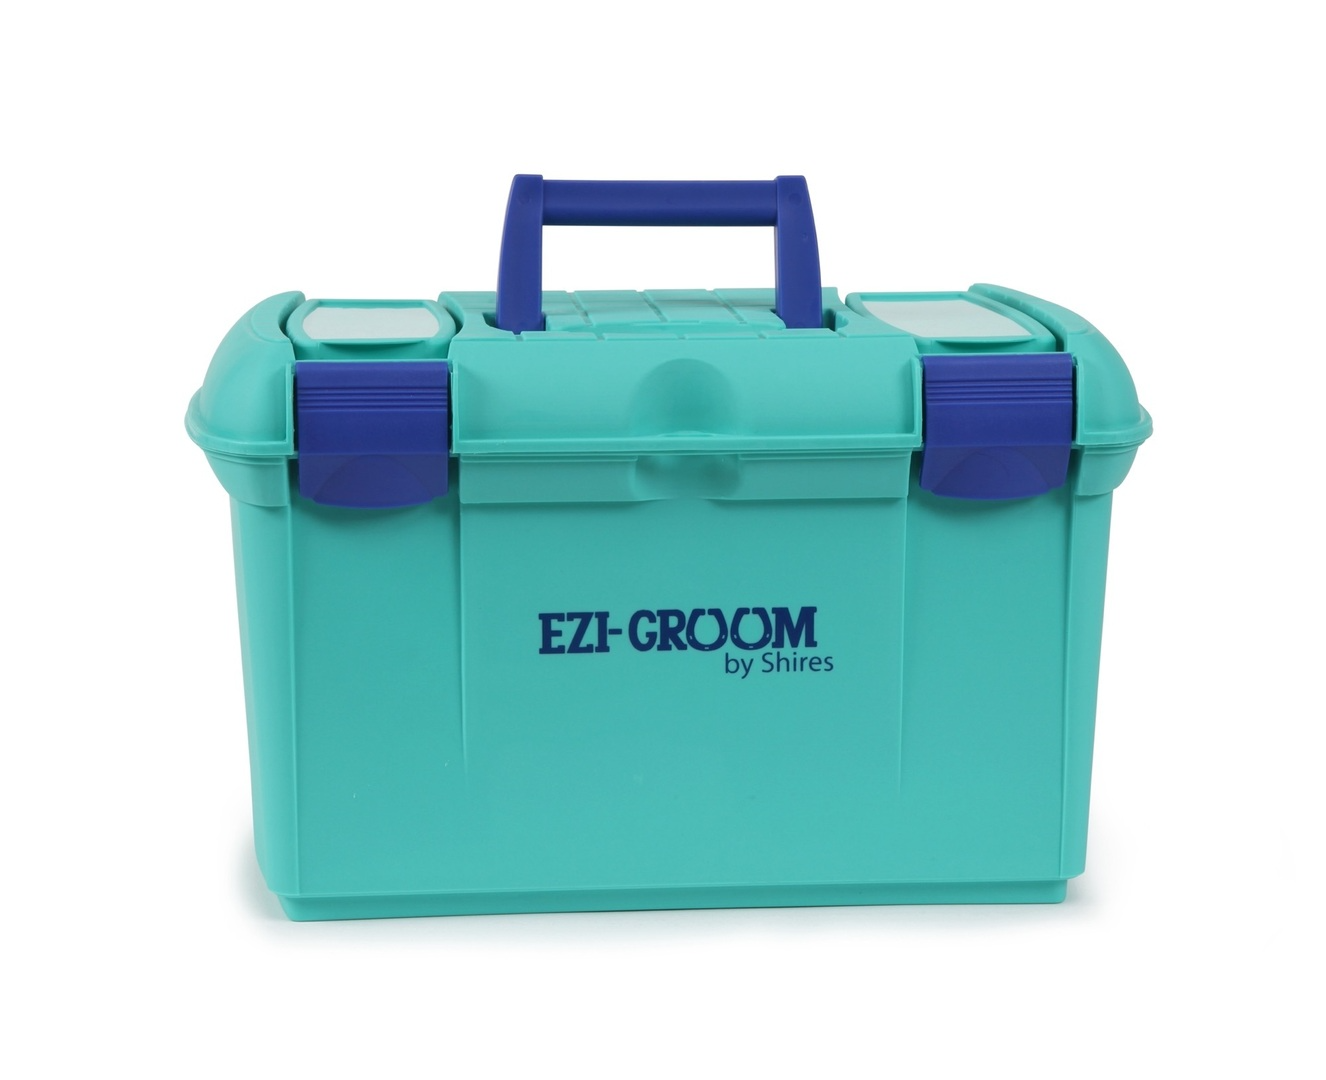 Ezi-Groom Tack Box